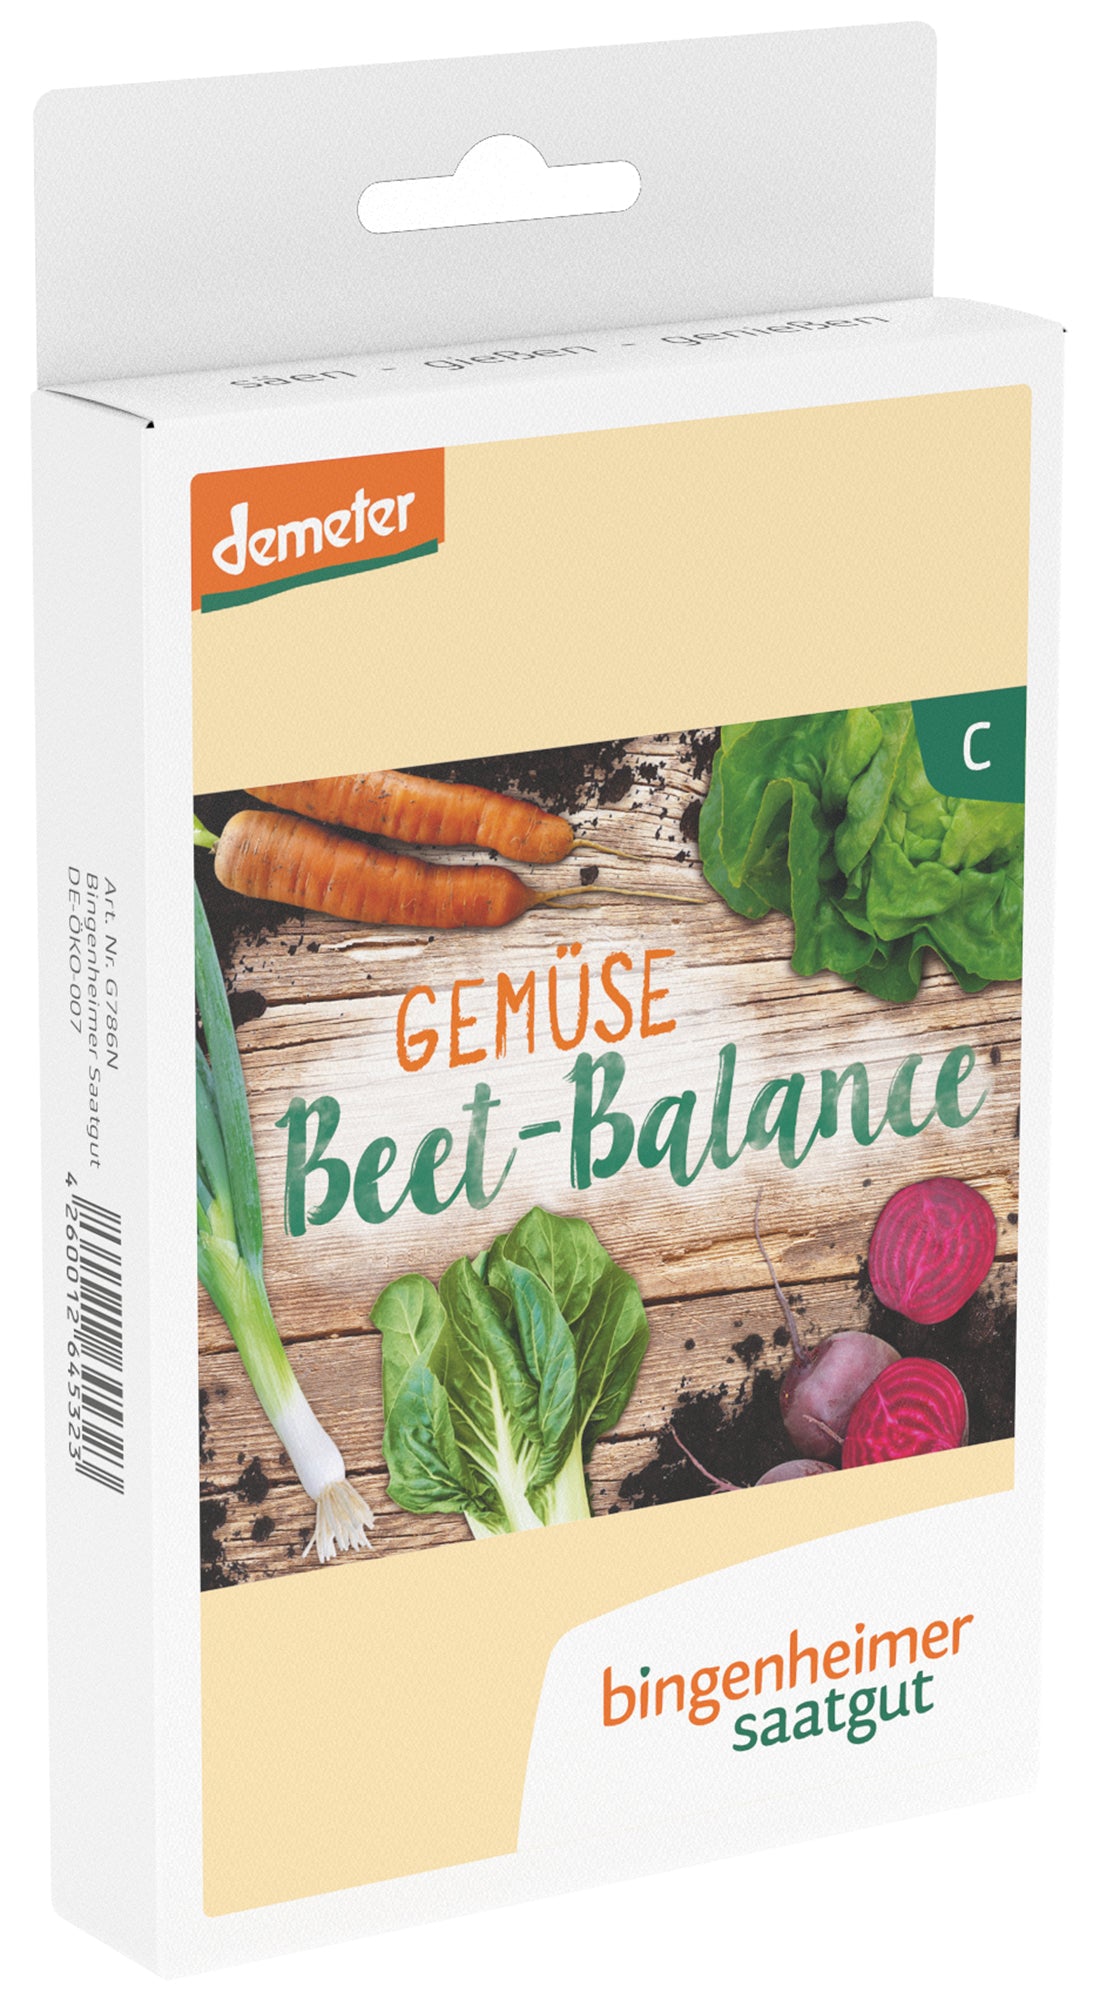 Gemüse Beet-Balance - Saatgutbox | BIO Gemüsesamen-Sets von Bingenheimer Saatgut